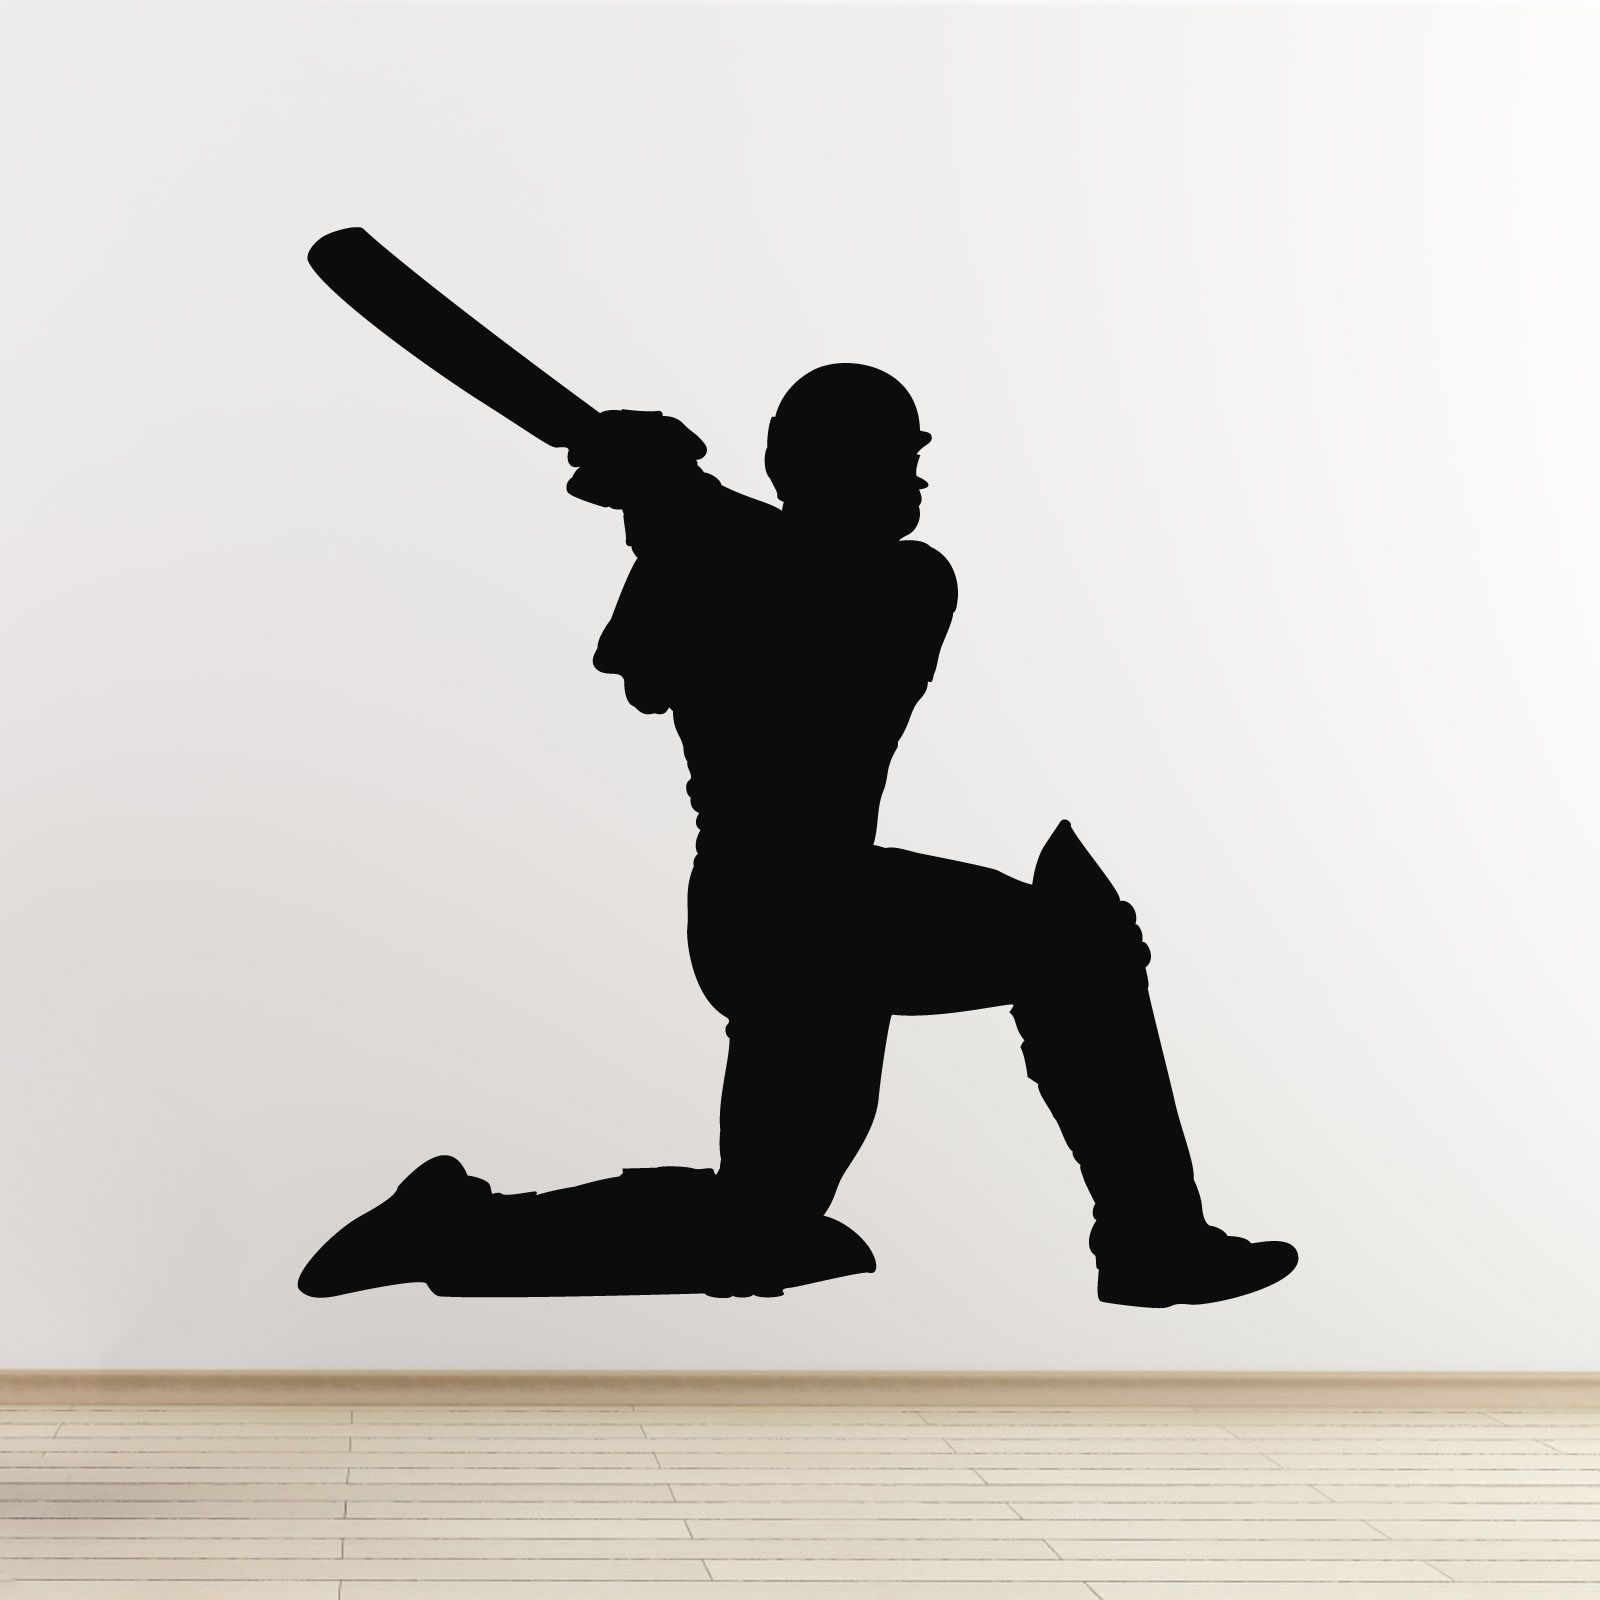 Cricket wall sticker.